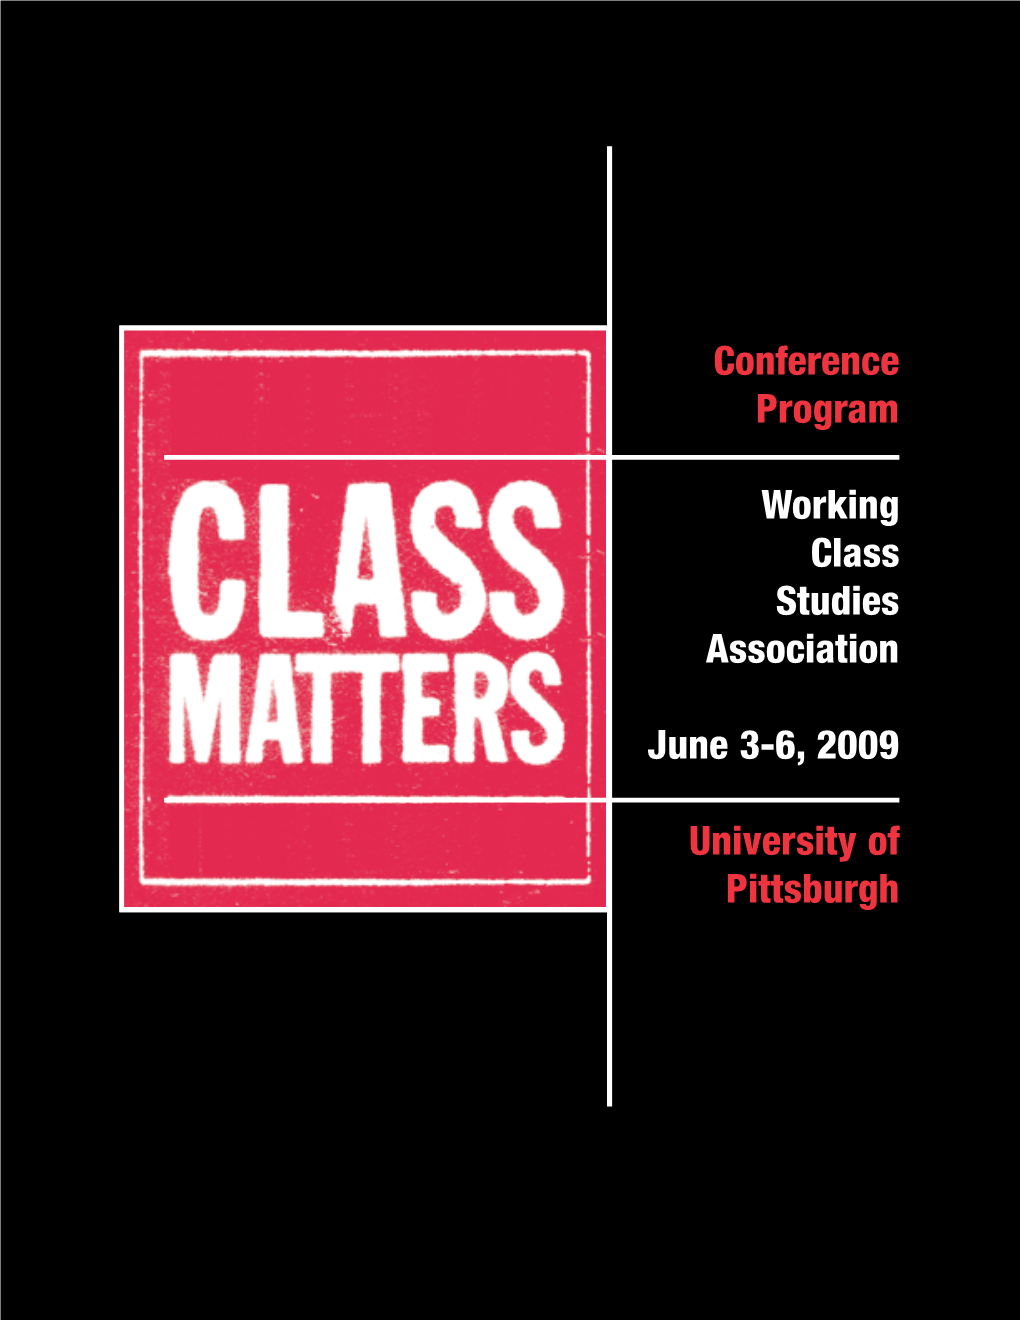 Conference Program Working Class Studies Association June 3-6, 2009